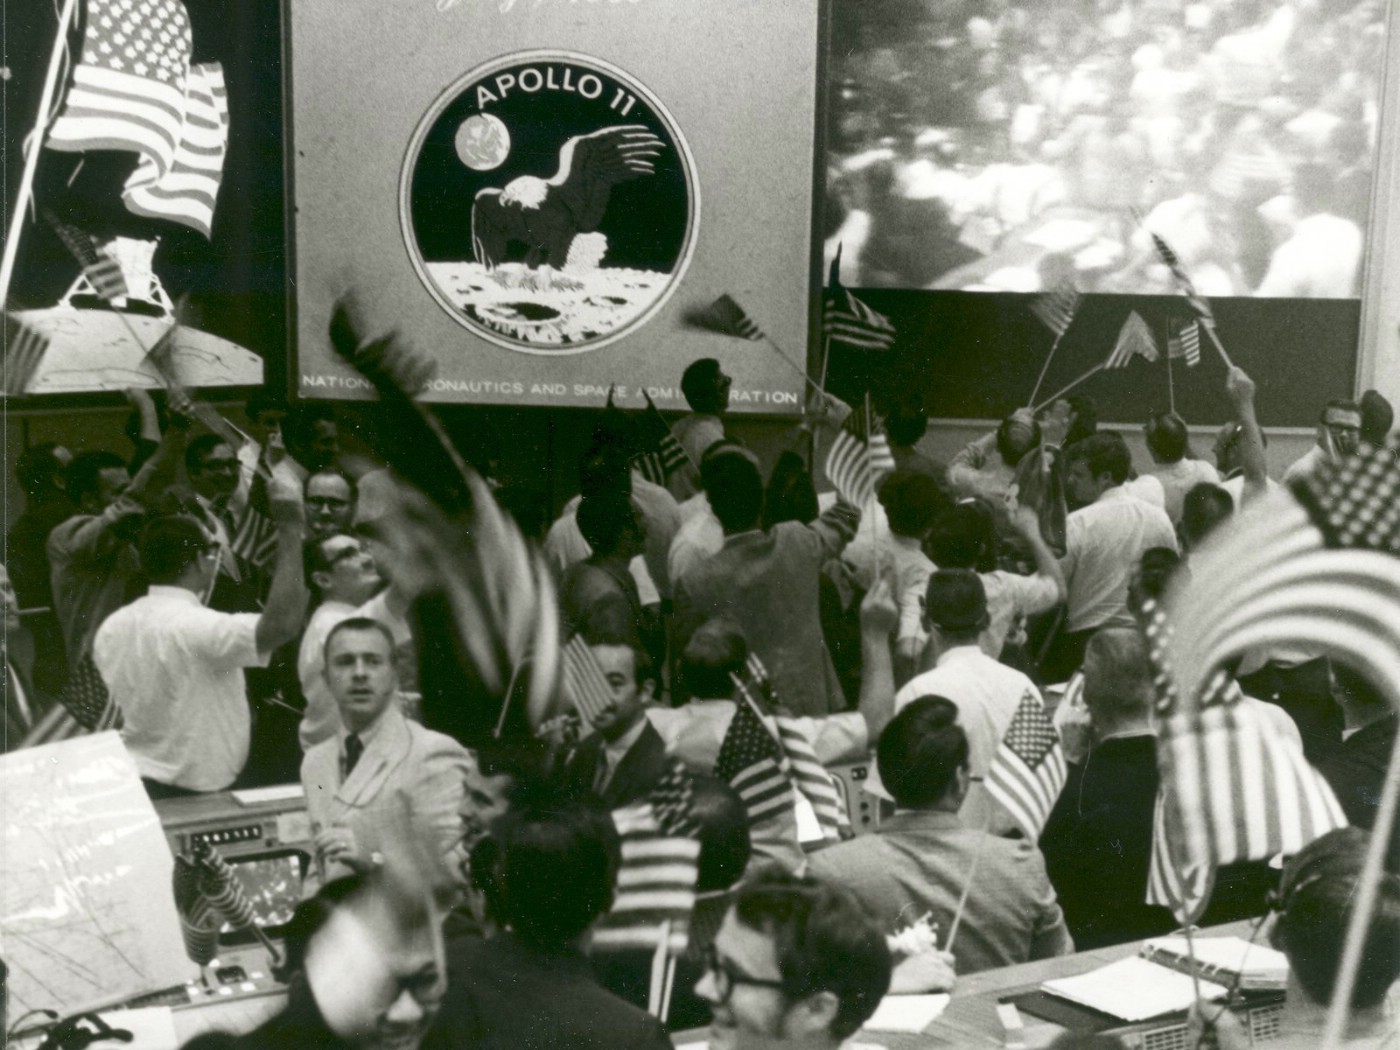 壁纸1400x1050One Giant Leap for Mankind  Mission Control Celebrates After Conclusion of the Apollo 11 Lunar 登月任务结束后的欢庆壁纸 阿波罗11号登月40周年纪念壁纸壁纸 阿波罗11号登月40周年纪念壁纸图片 阿波罗11号登月40周年纪念壁纸素材 人文壁纸 人文图库 人文图片素材桌面壁纸